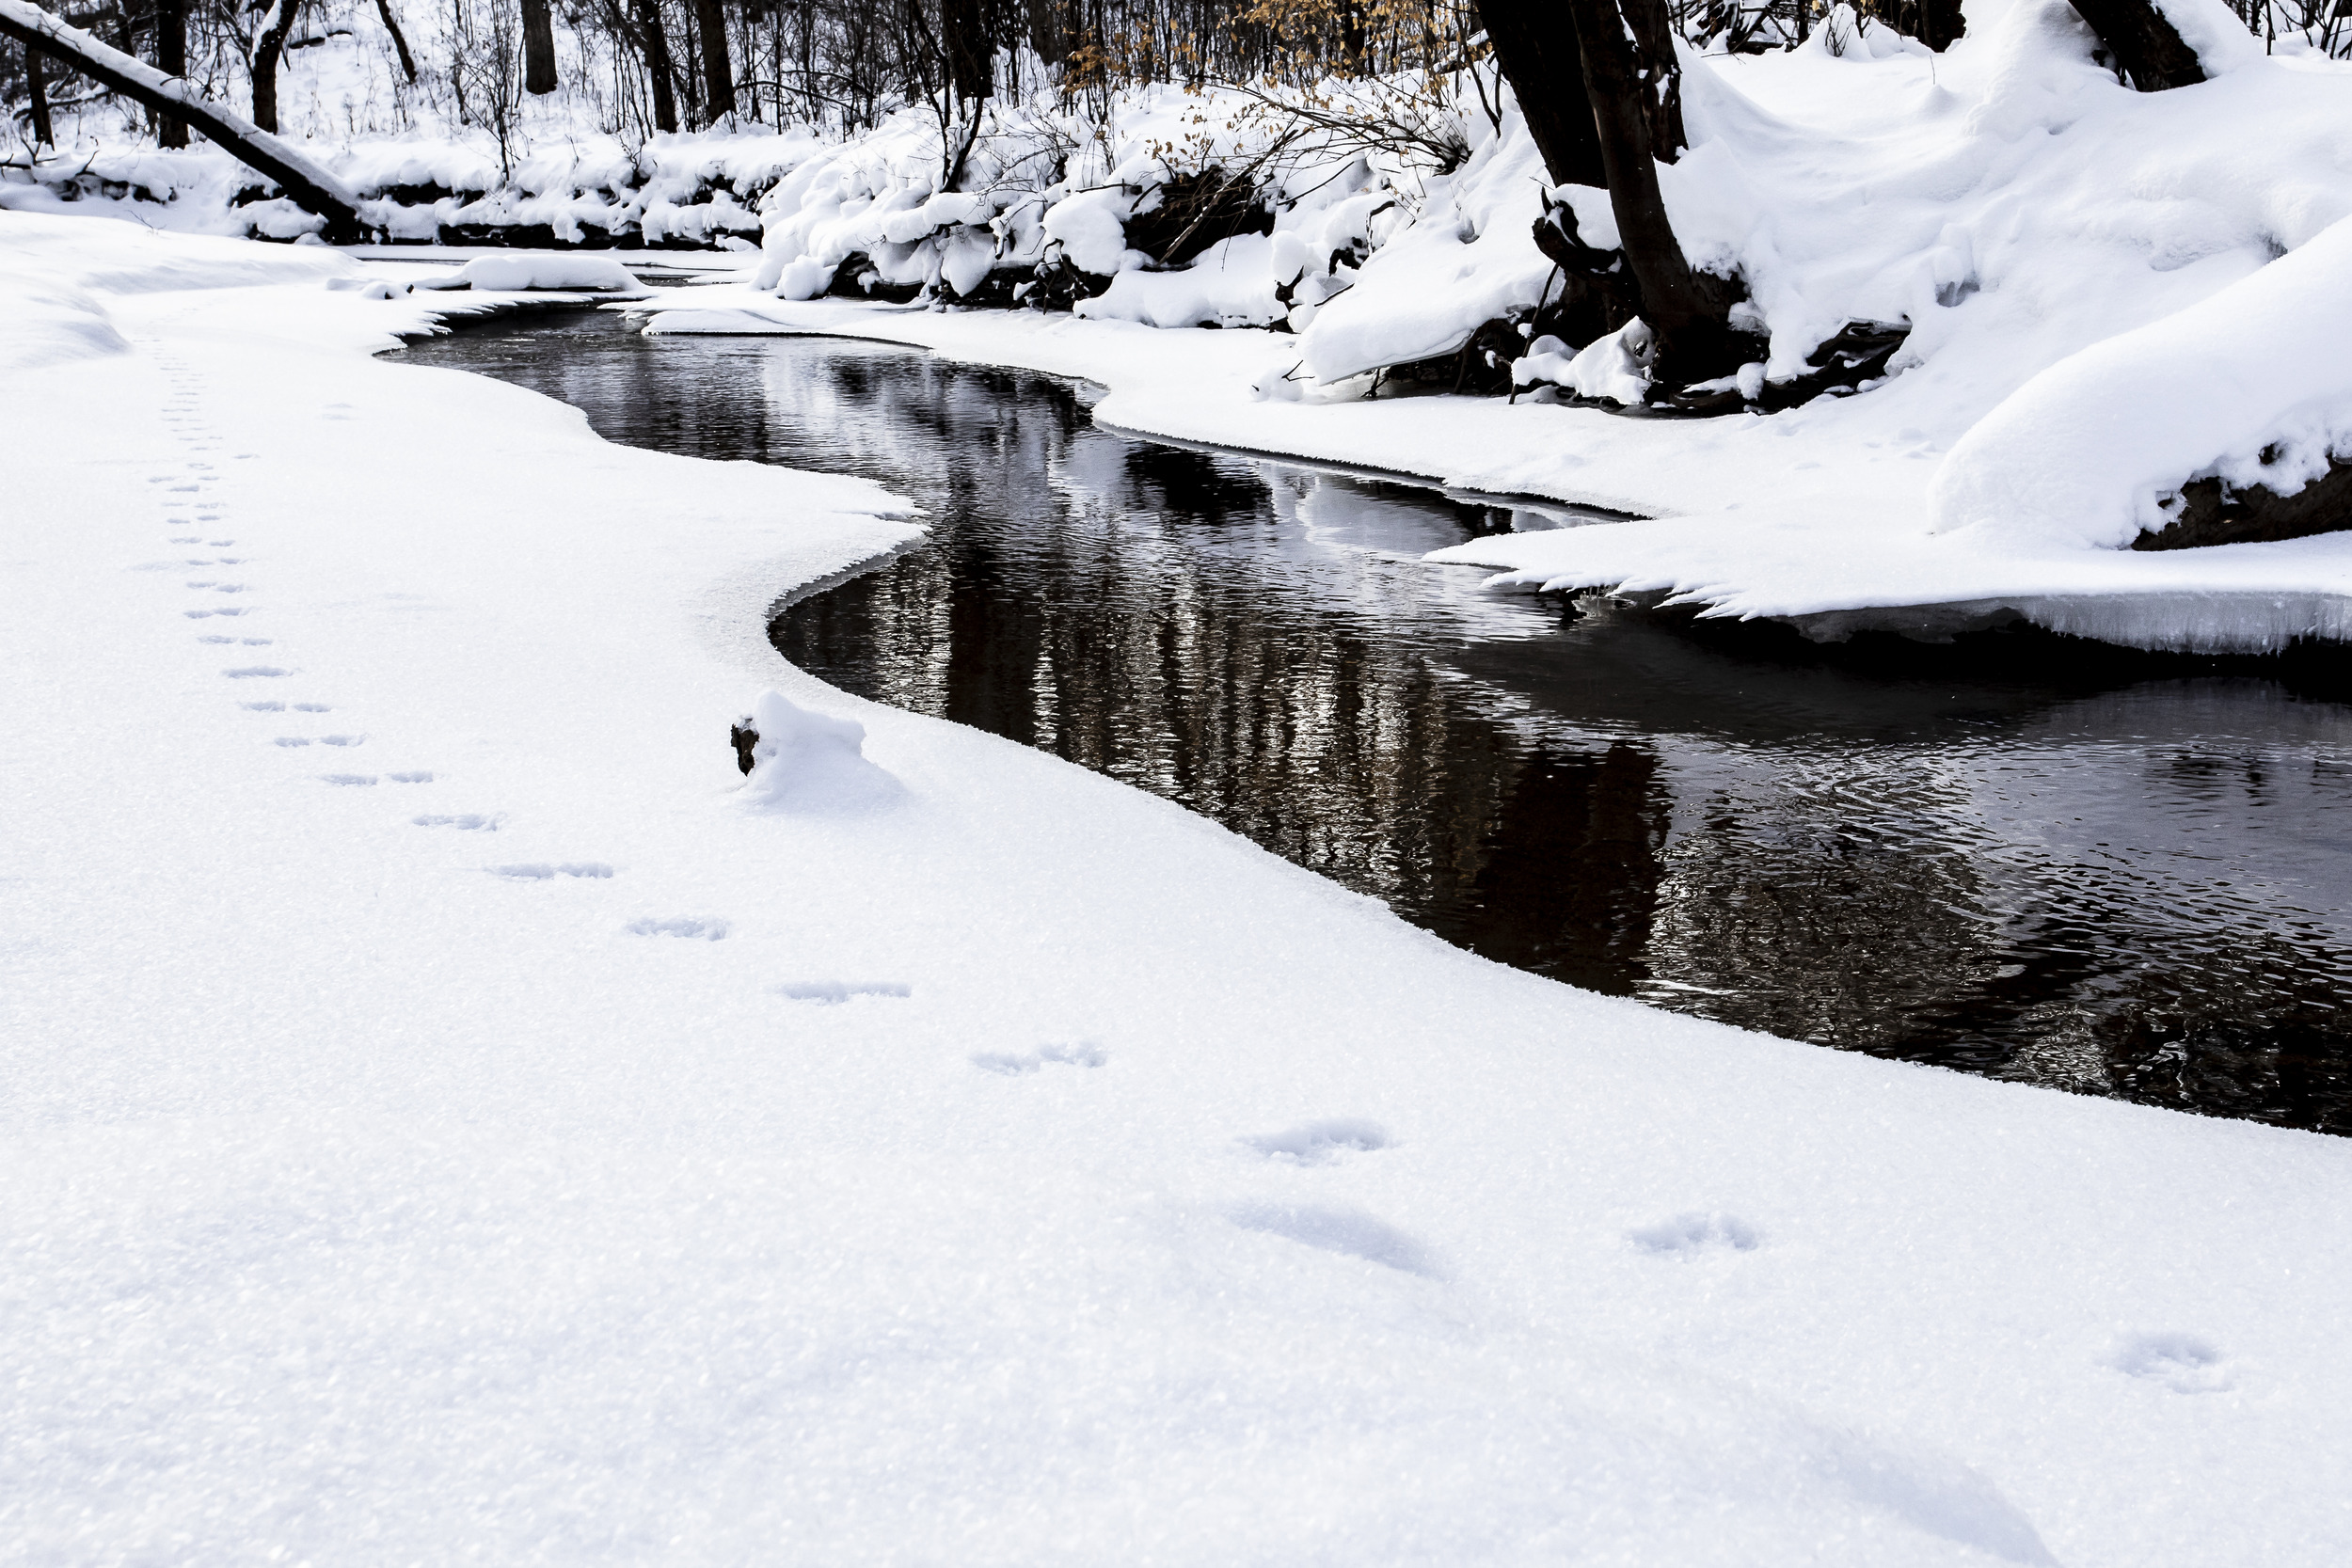 m-d-lingl-photography-Snowy-Footprints-1